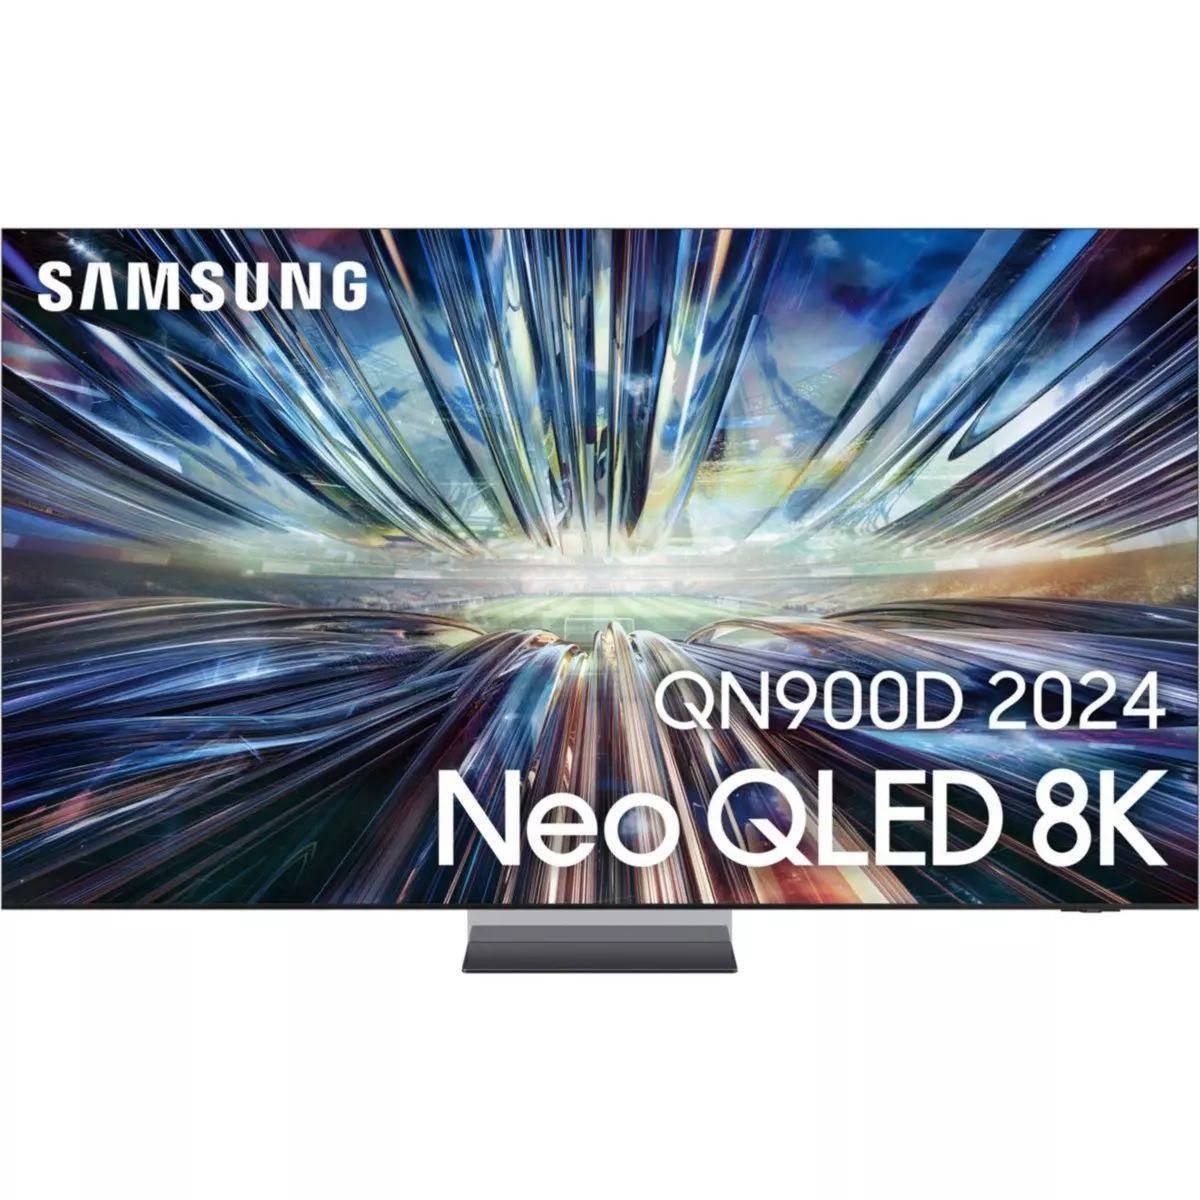 Samsung TV QLED NeoQLED TQ75QN900D 8K AI Smart TV 2024